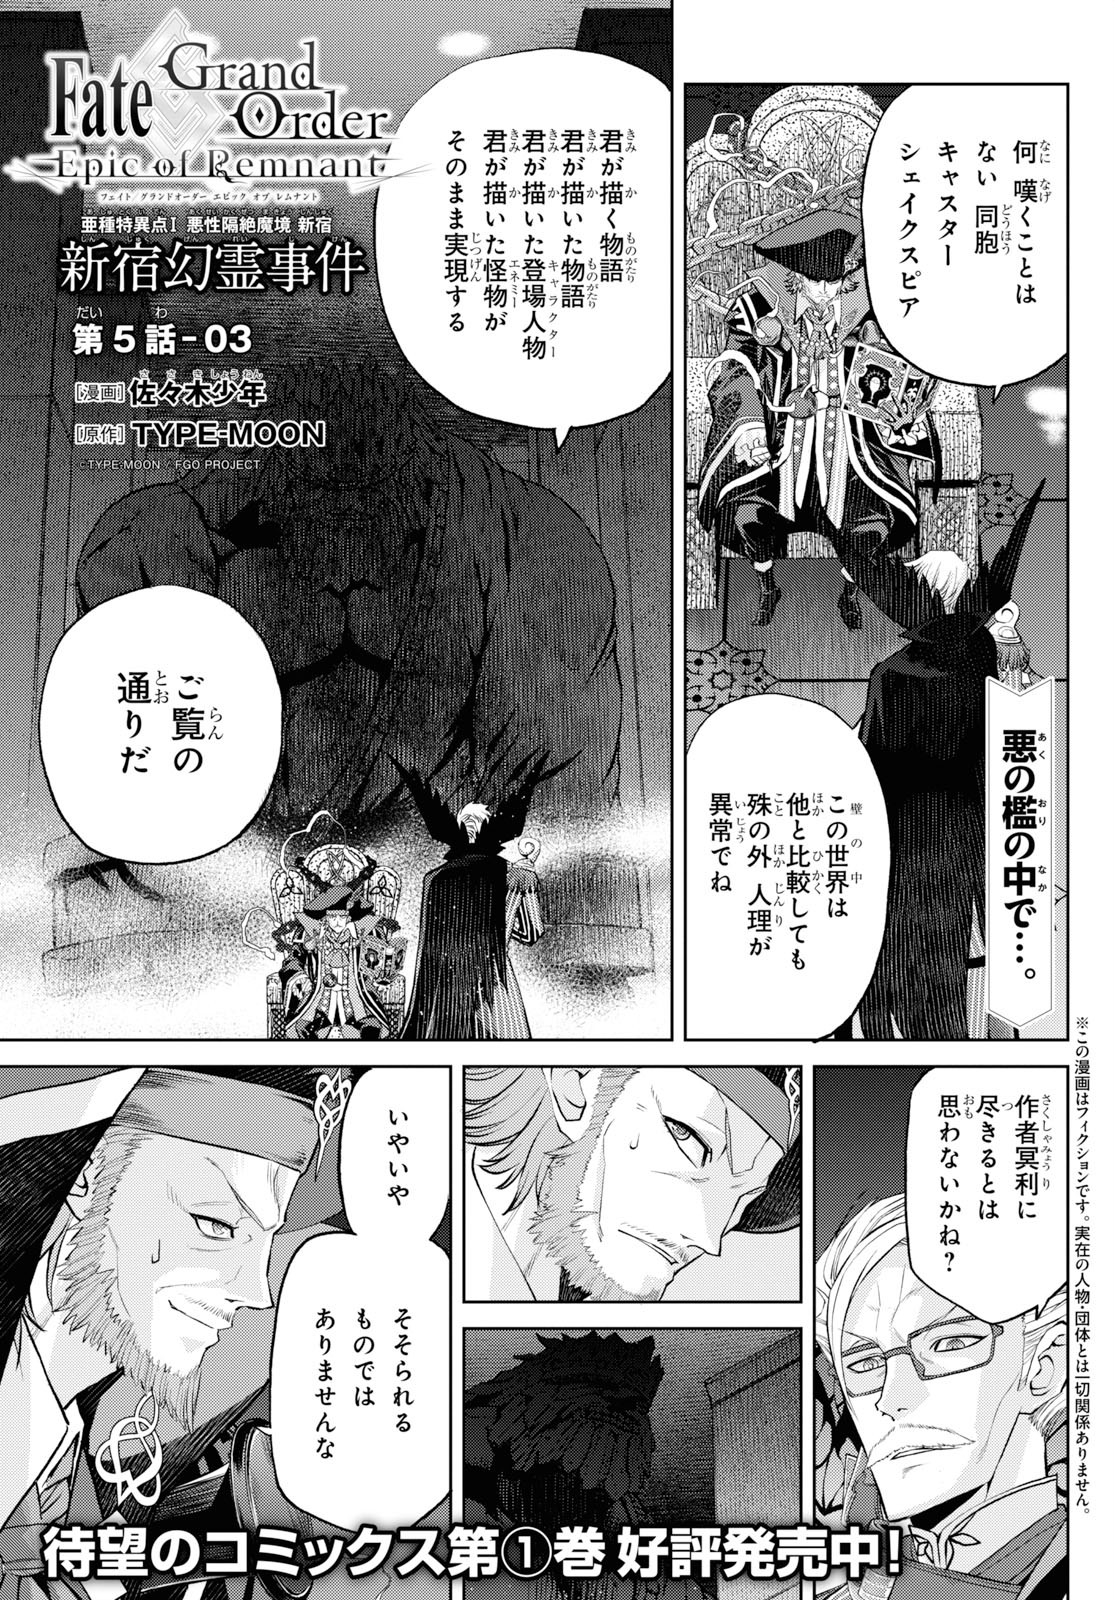 Fate/Grand Order: Epic of Remnant – 亜種特異点I 悪性隔絶魔境 新宿 新宿幻霊事件 第5.3話 - Page 1